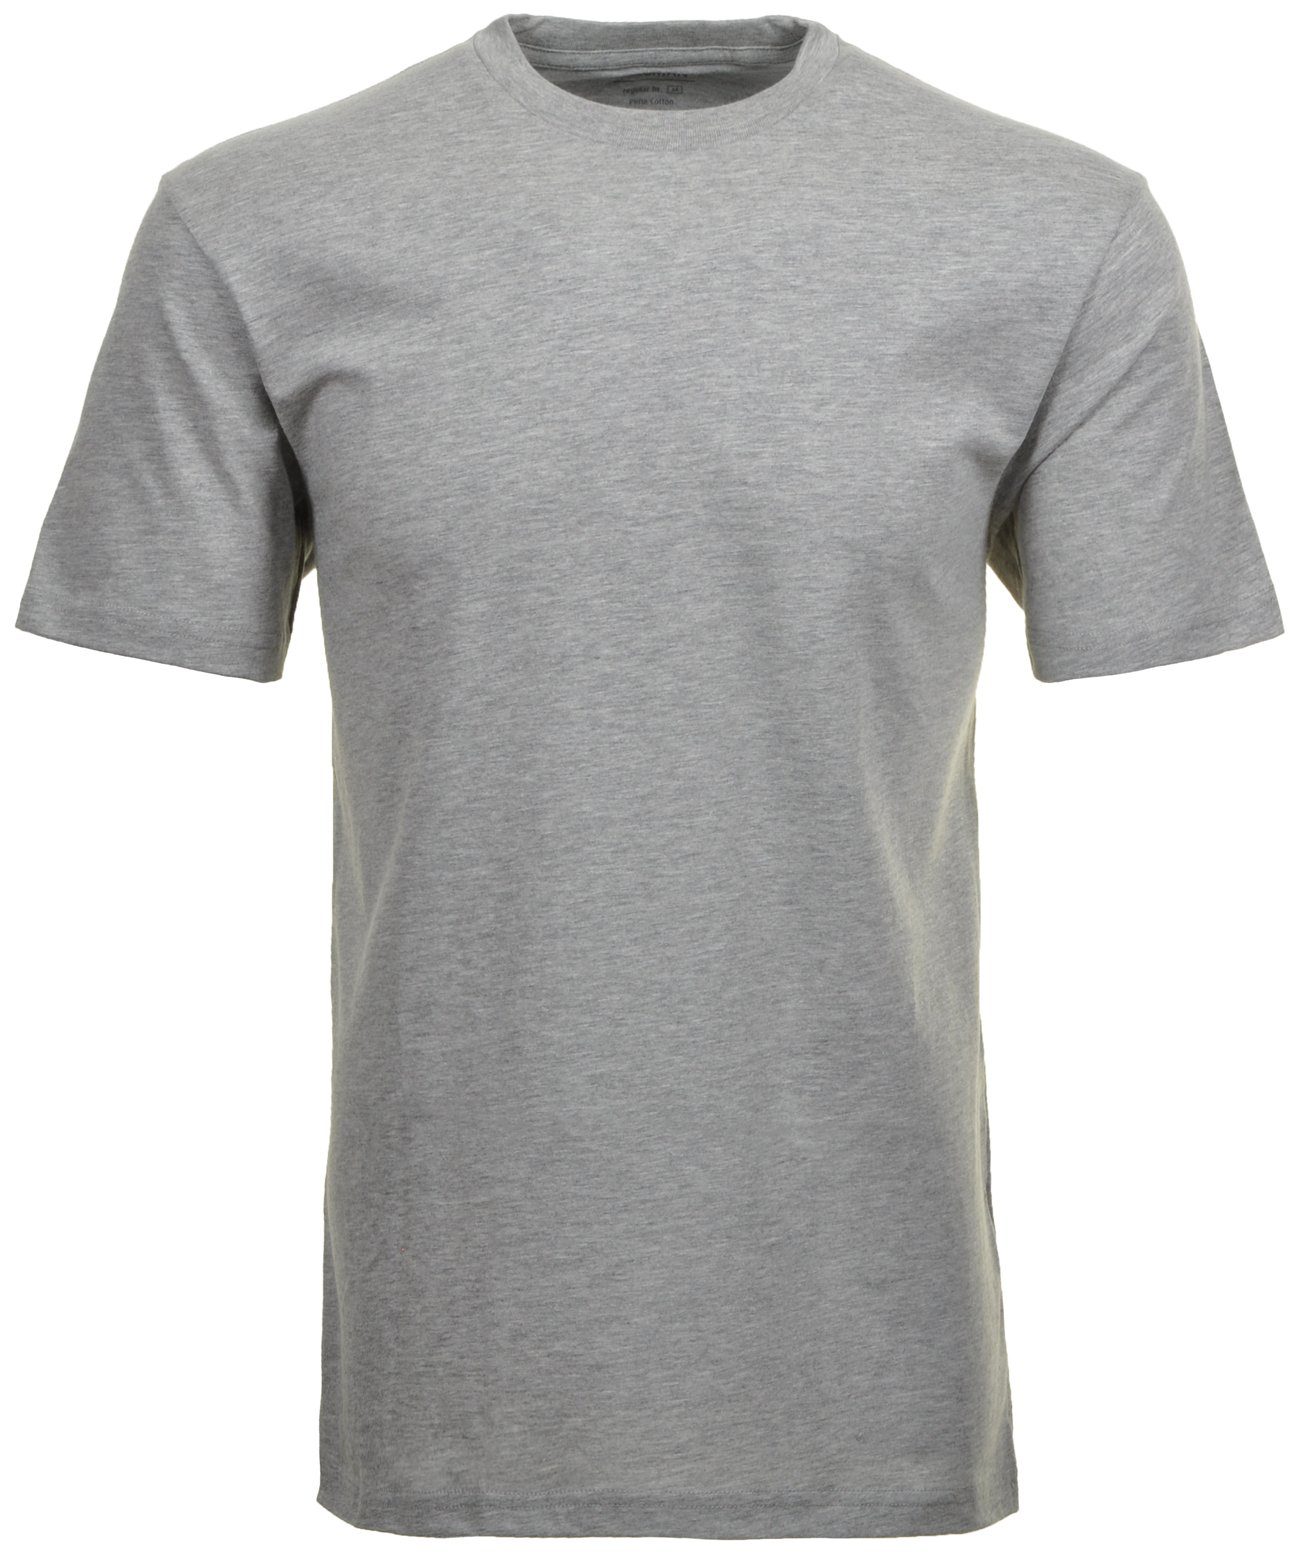 RAGMAN T-Shirt (Packung) Grau-Melange